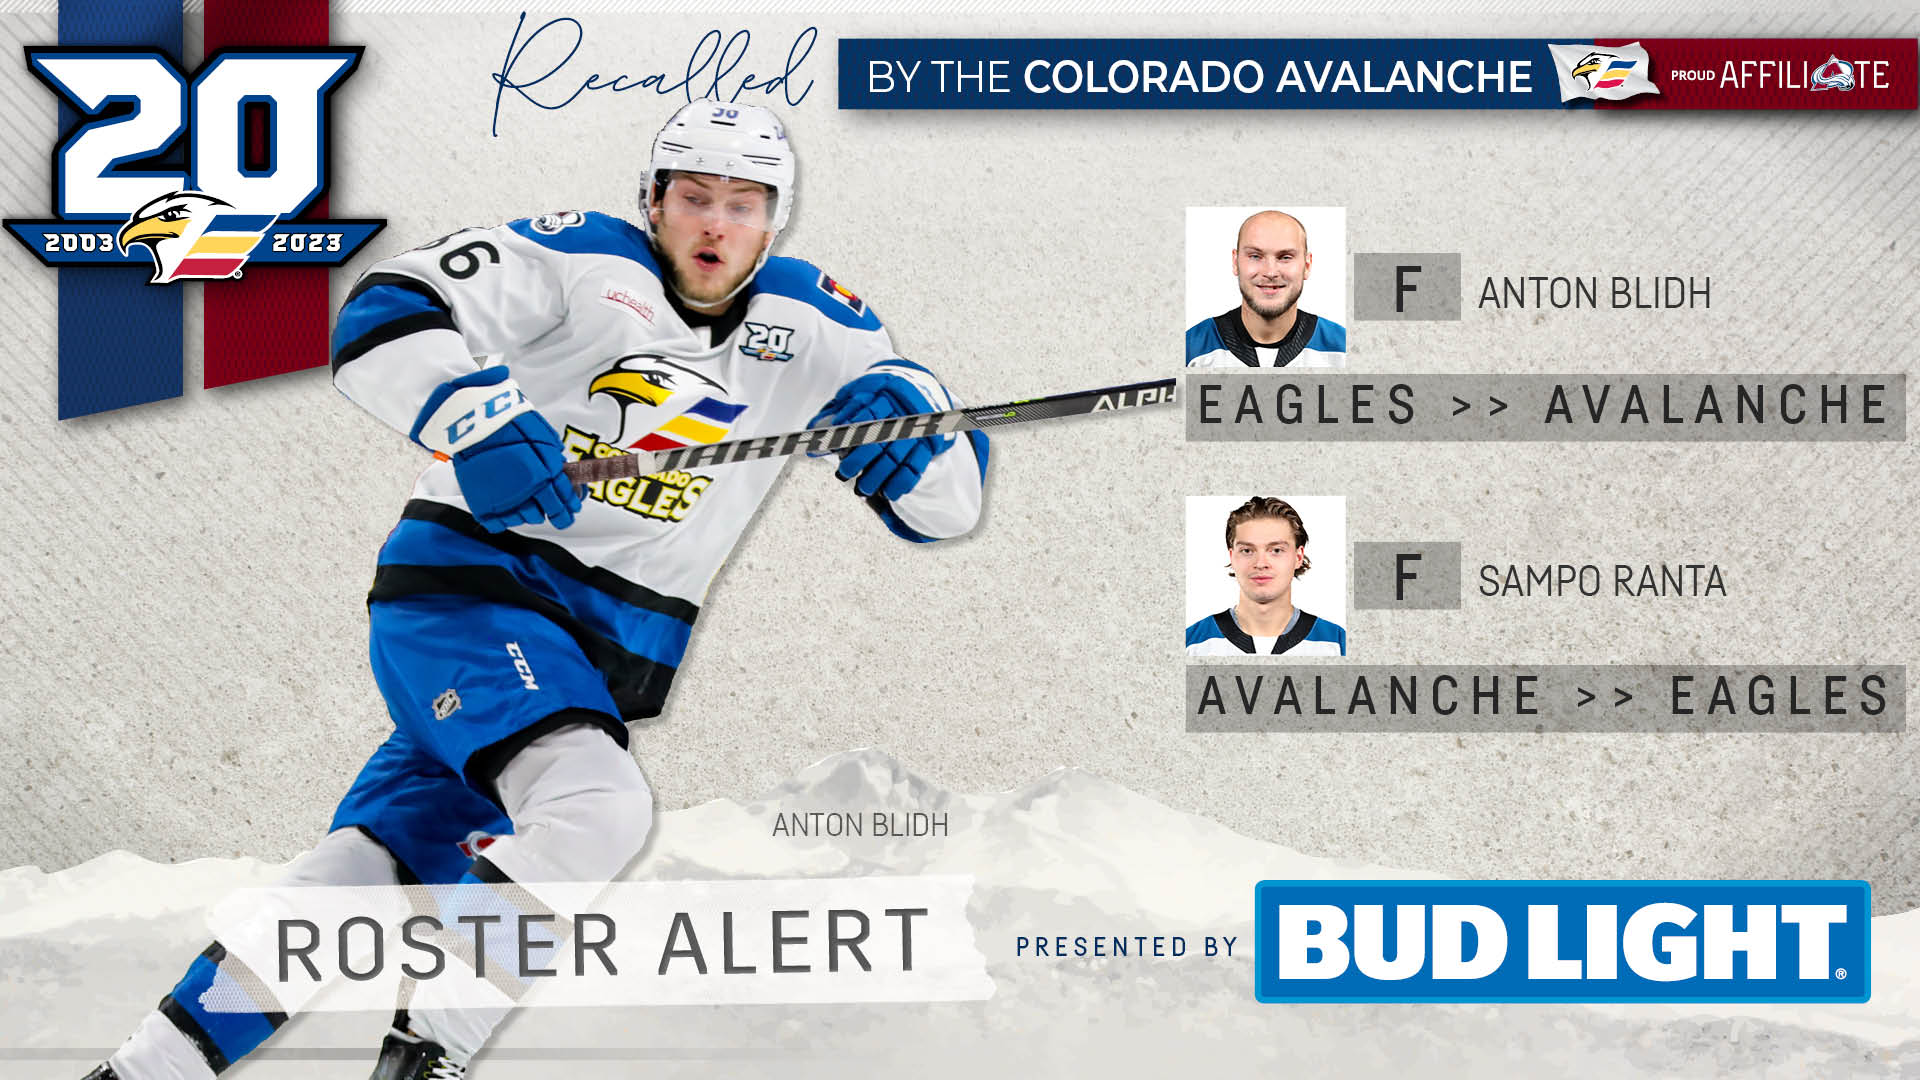 Colorado Eagles - ROSTER ALERT: The Colorado Avalanche